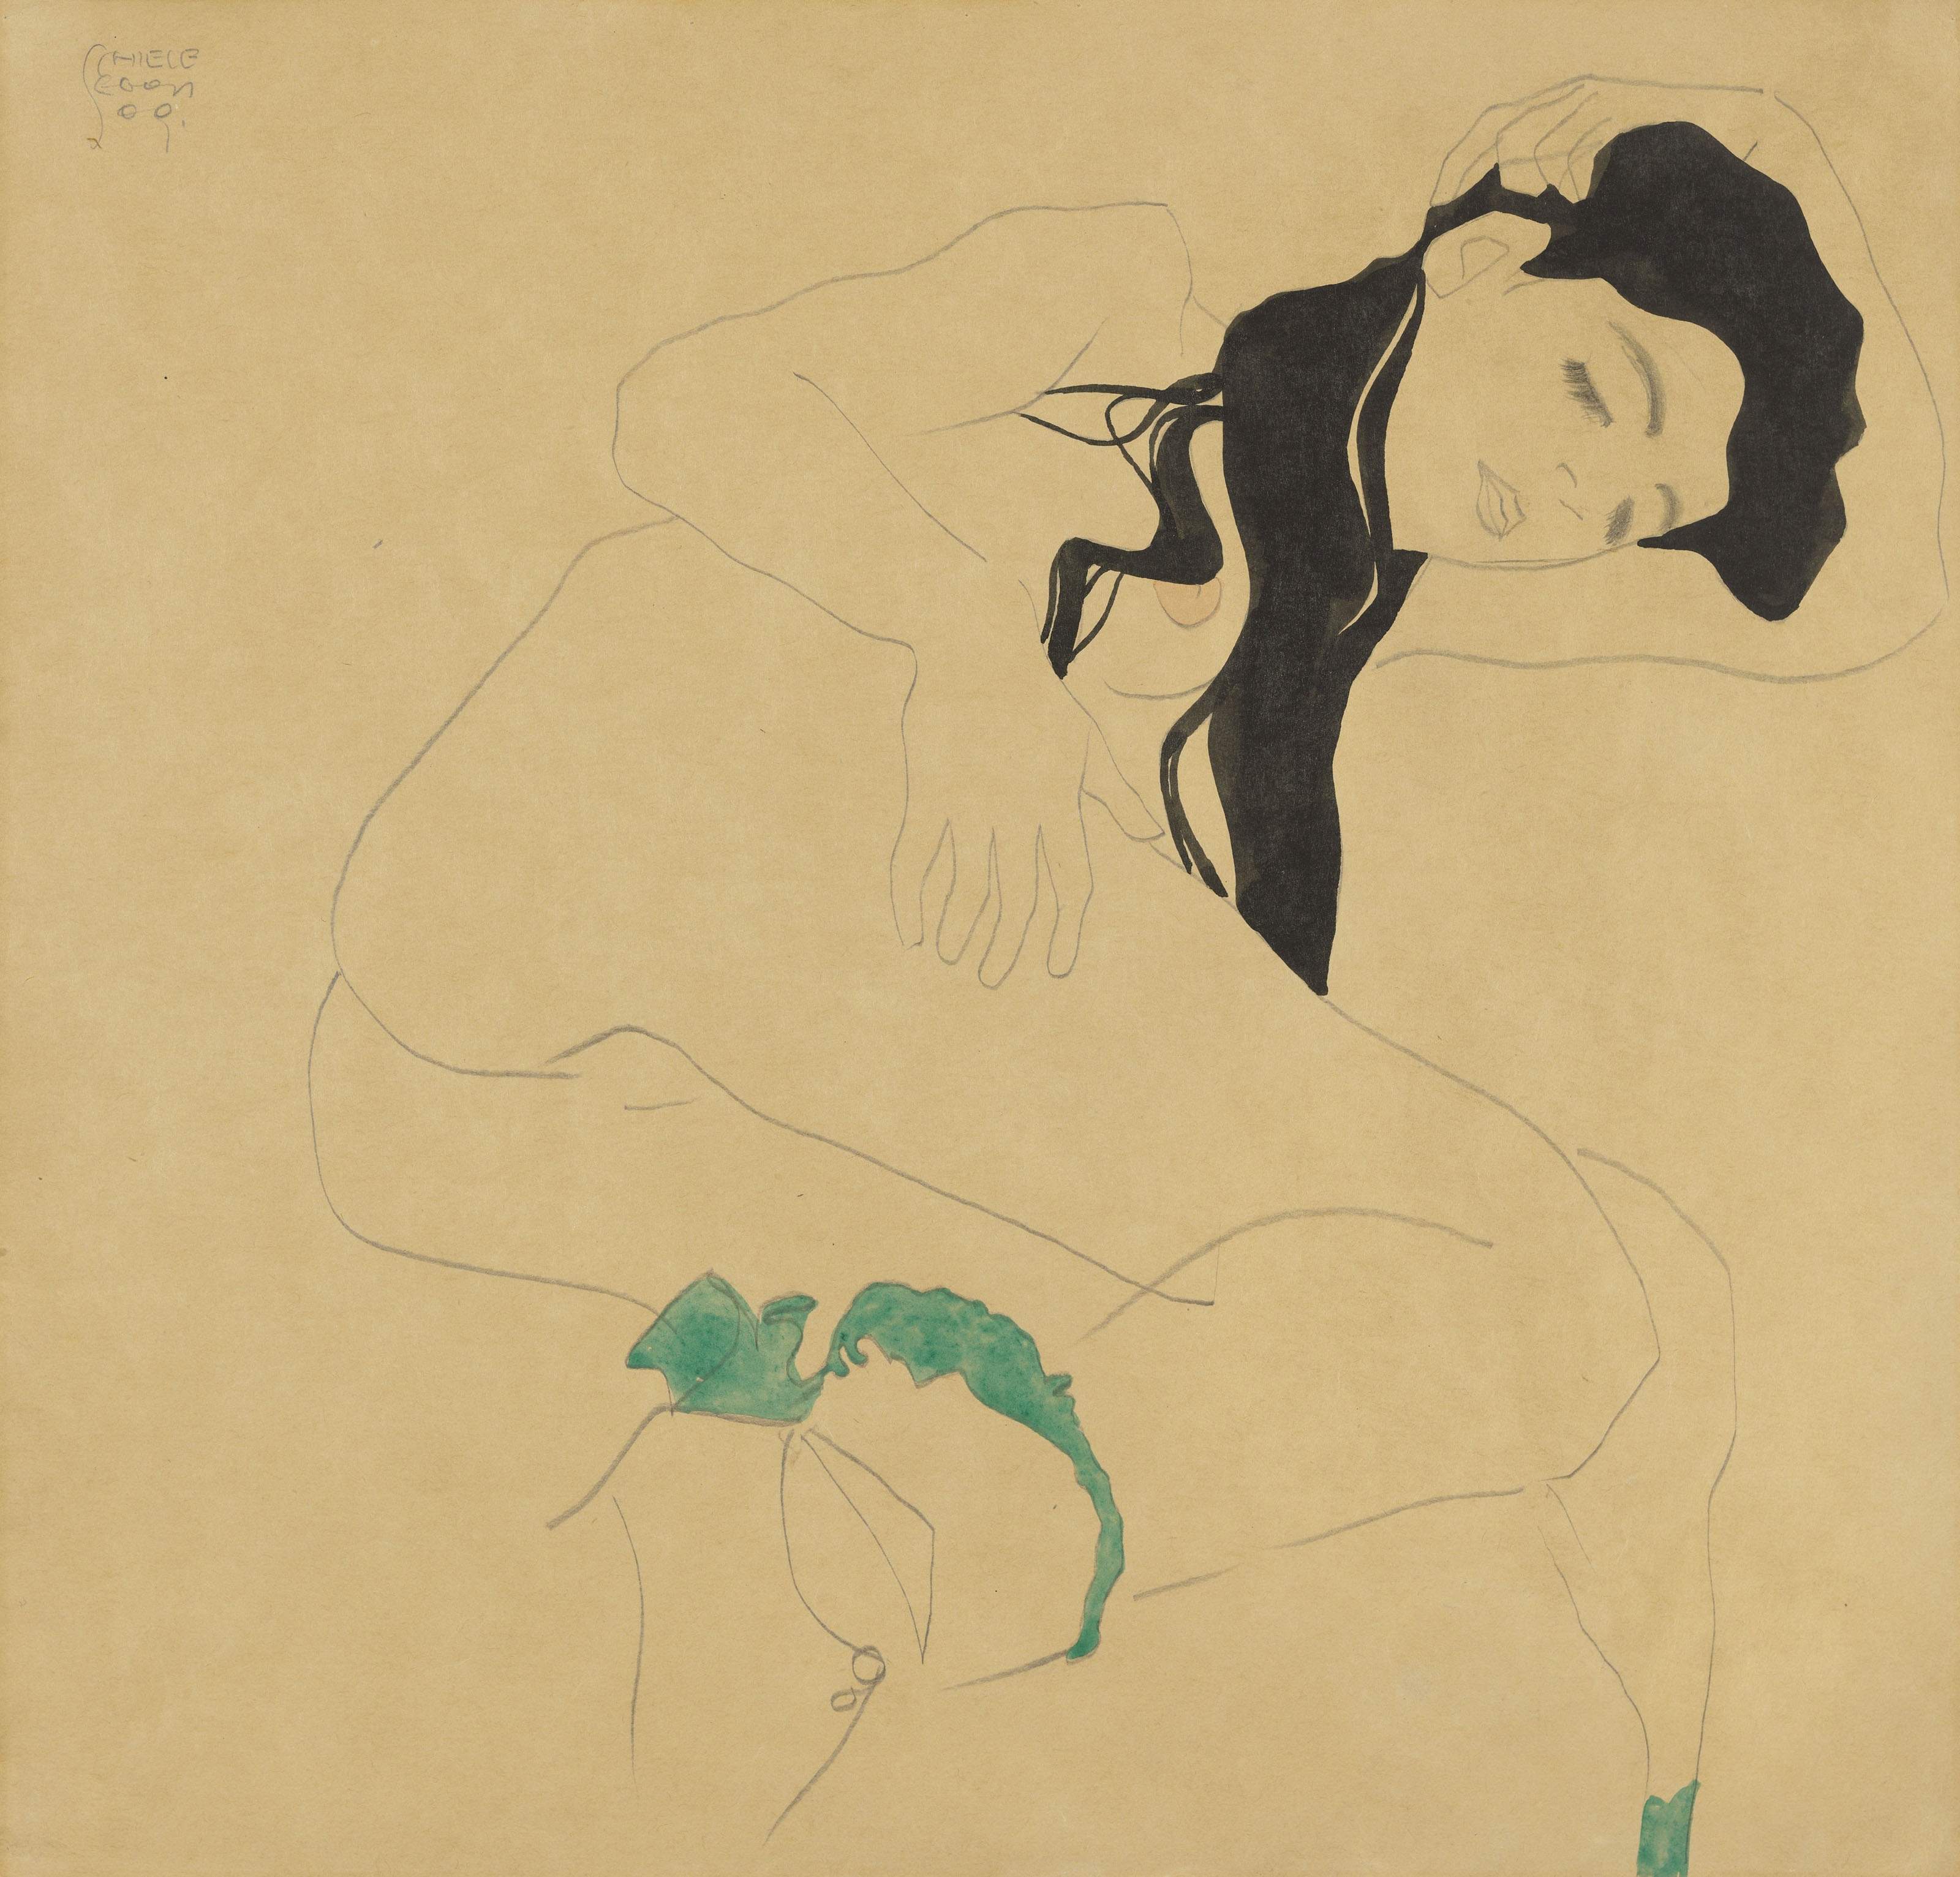 Шиле (Schiele) Эгон (1890-1918)